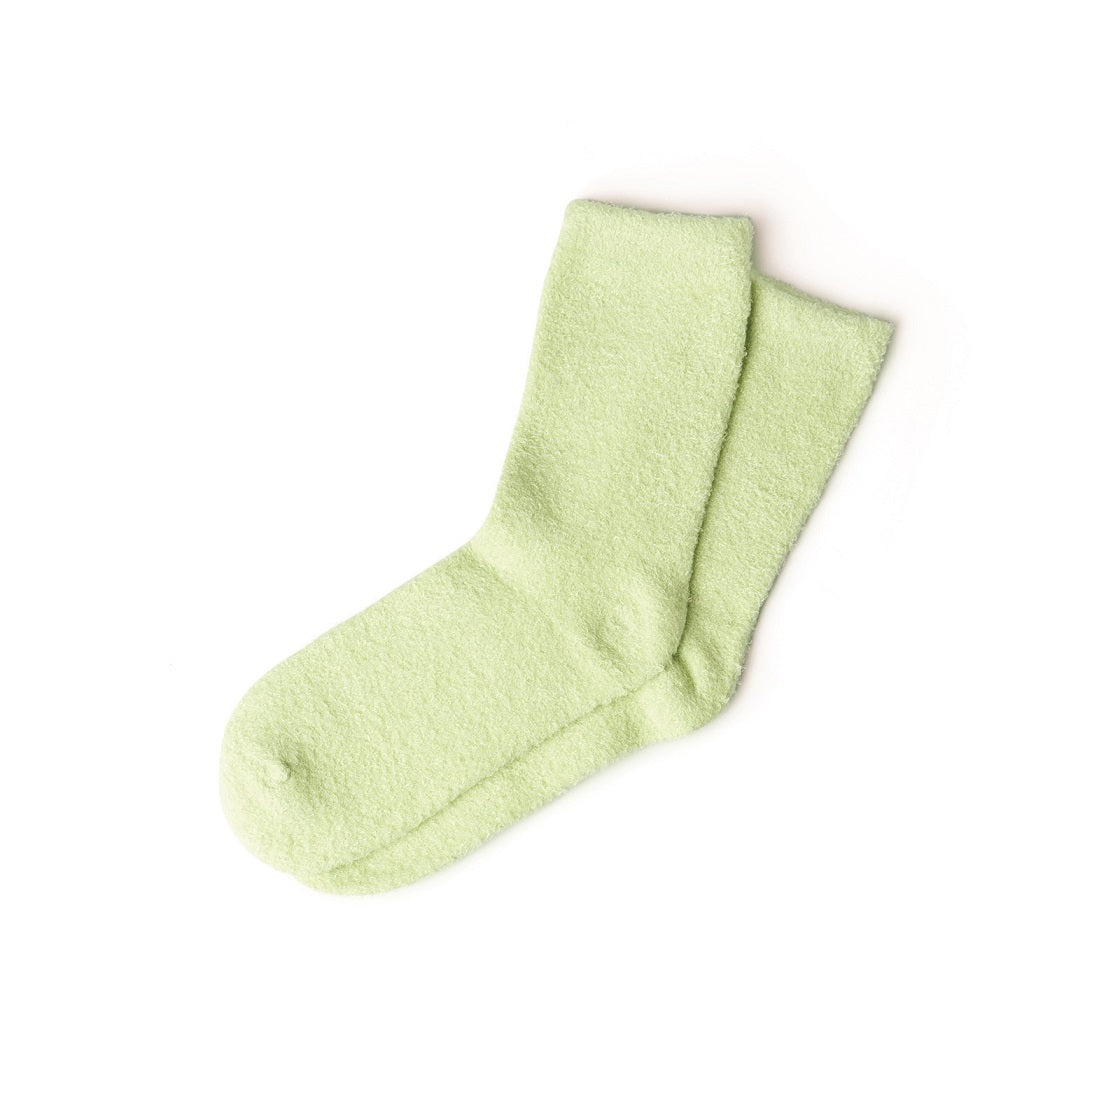 Super Soft Aloe Spa Socks (More Color Options)